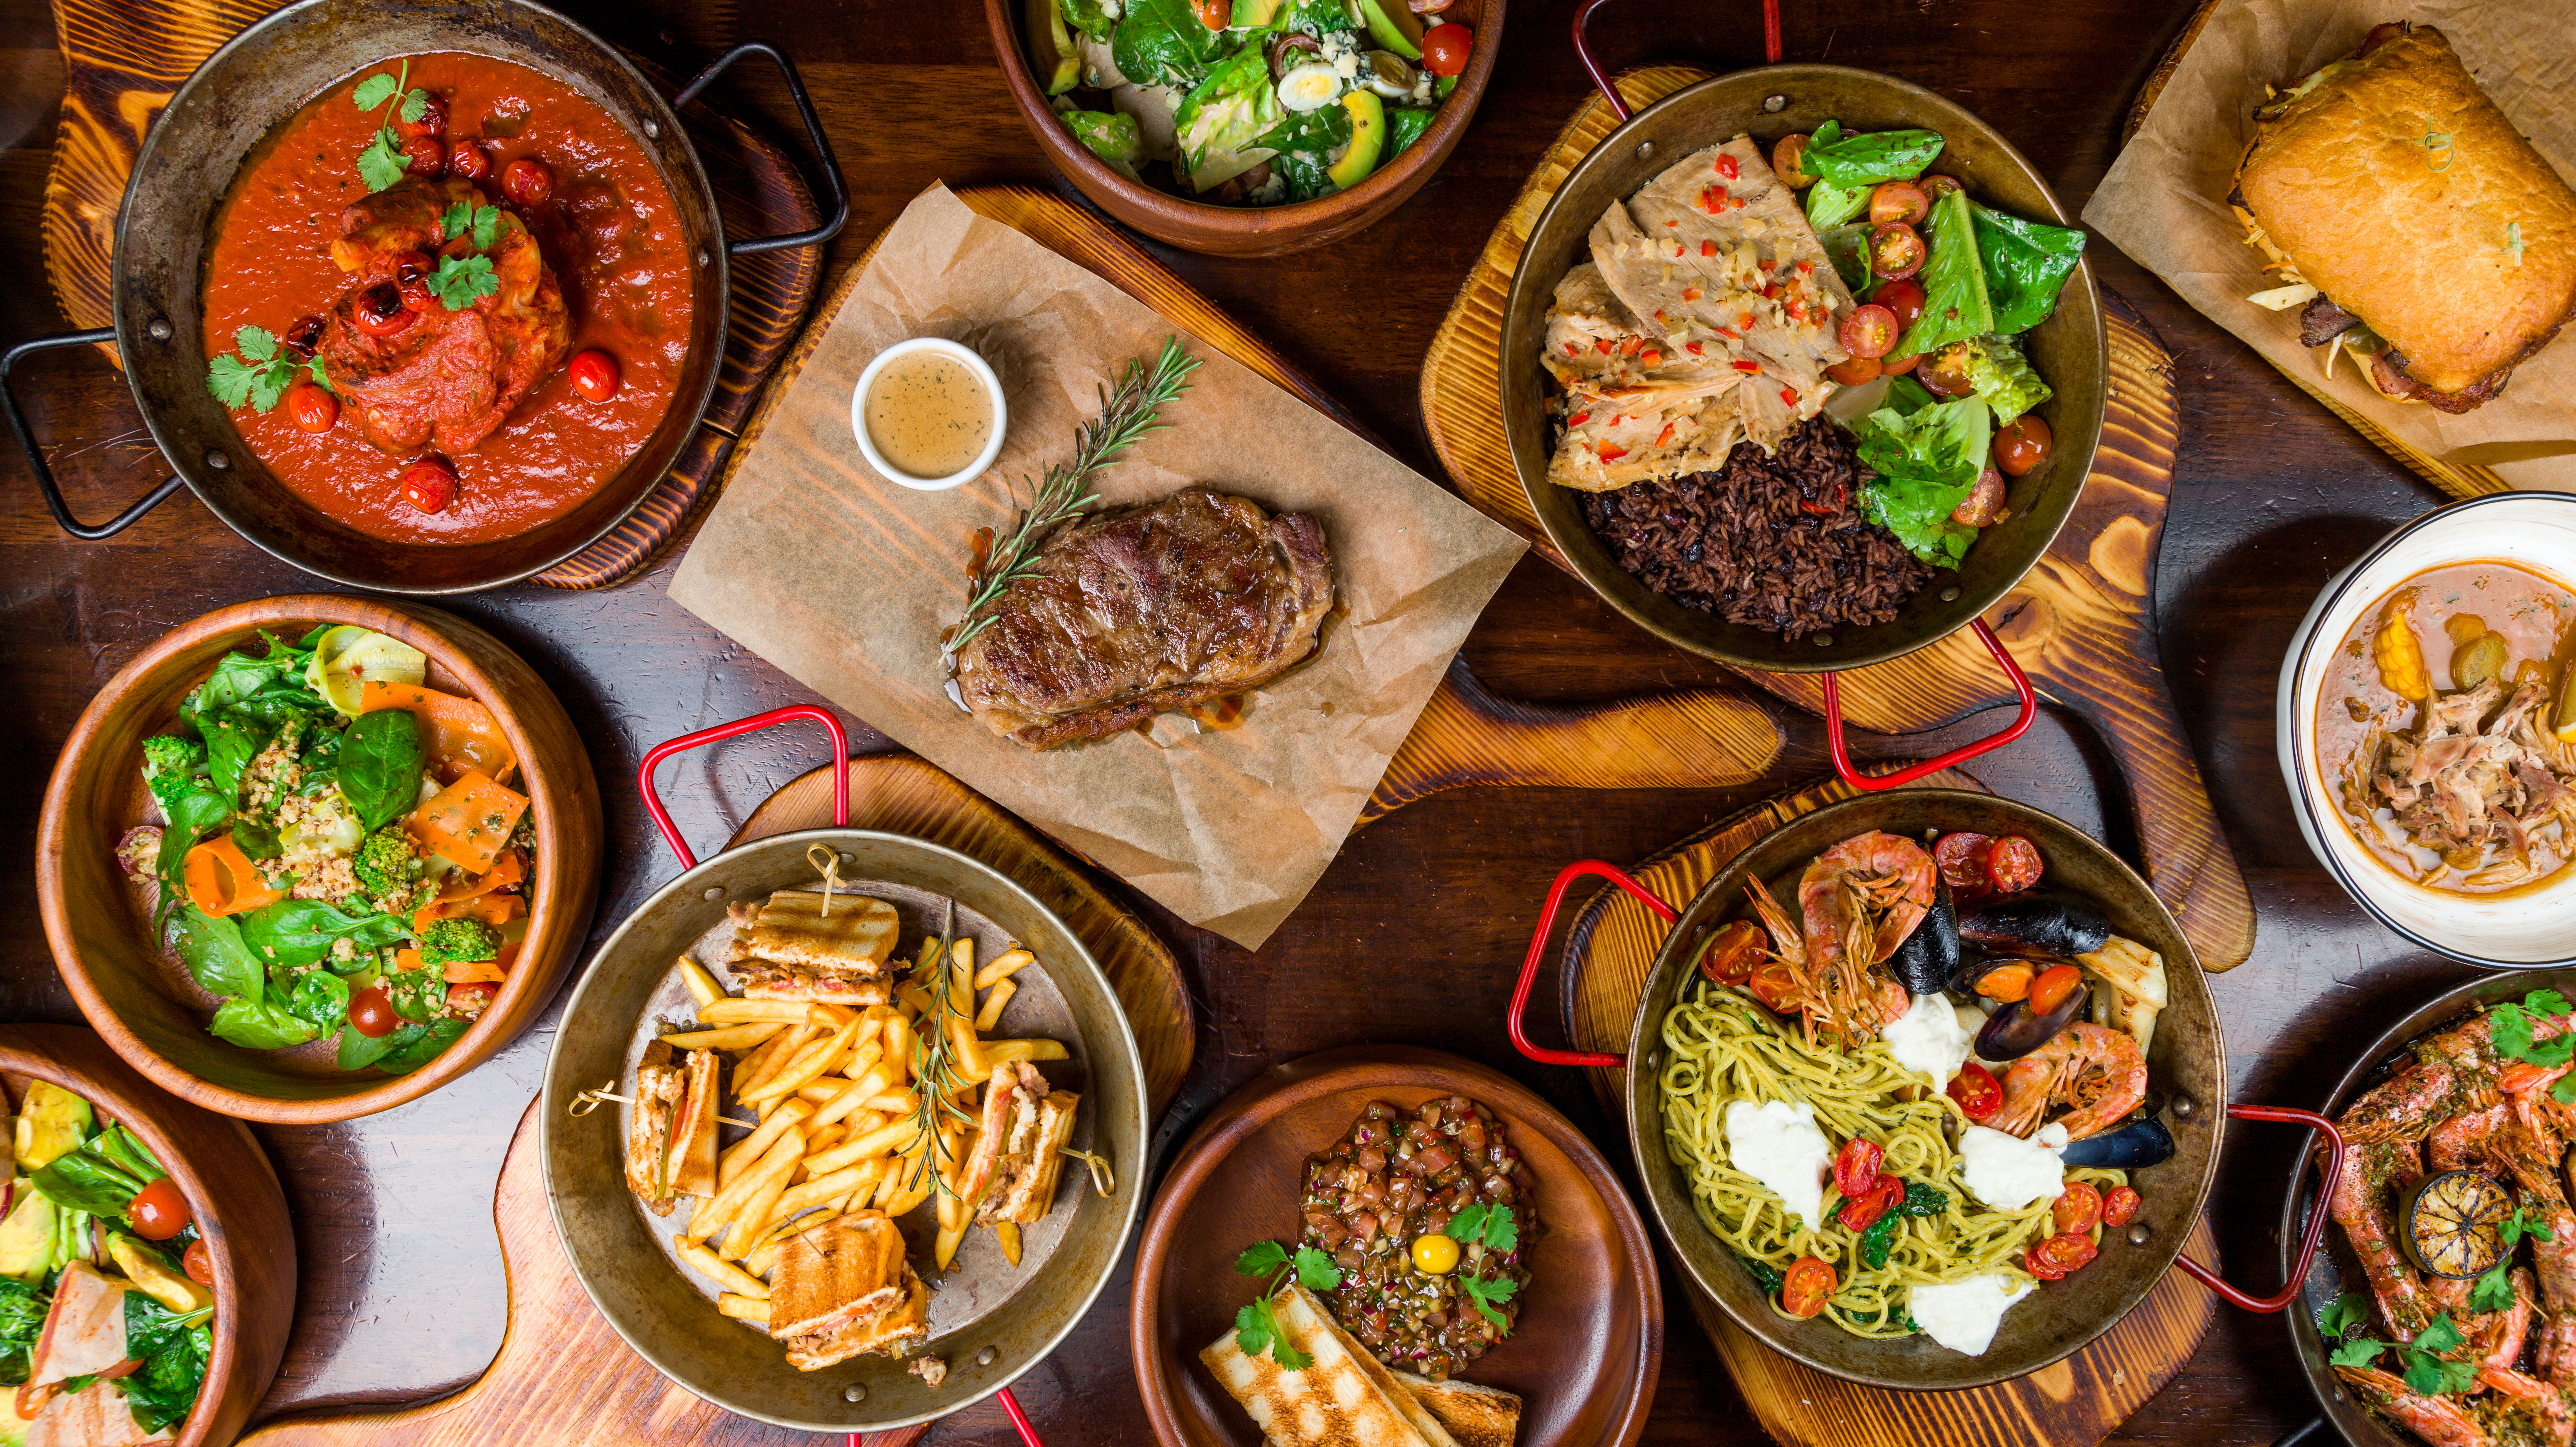 table full of food | Shutterstock